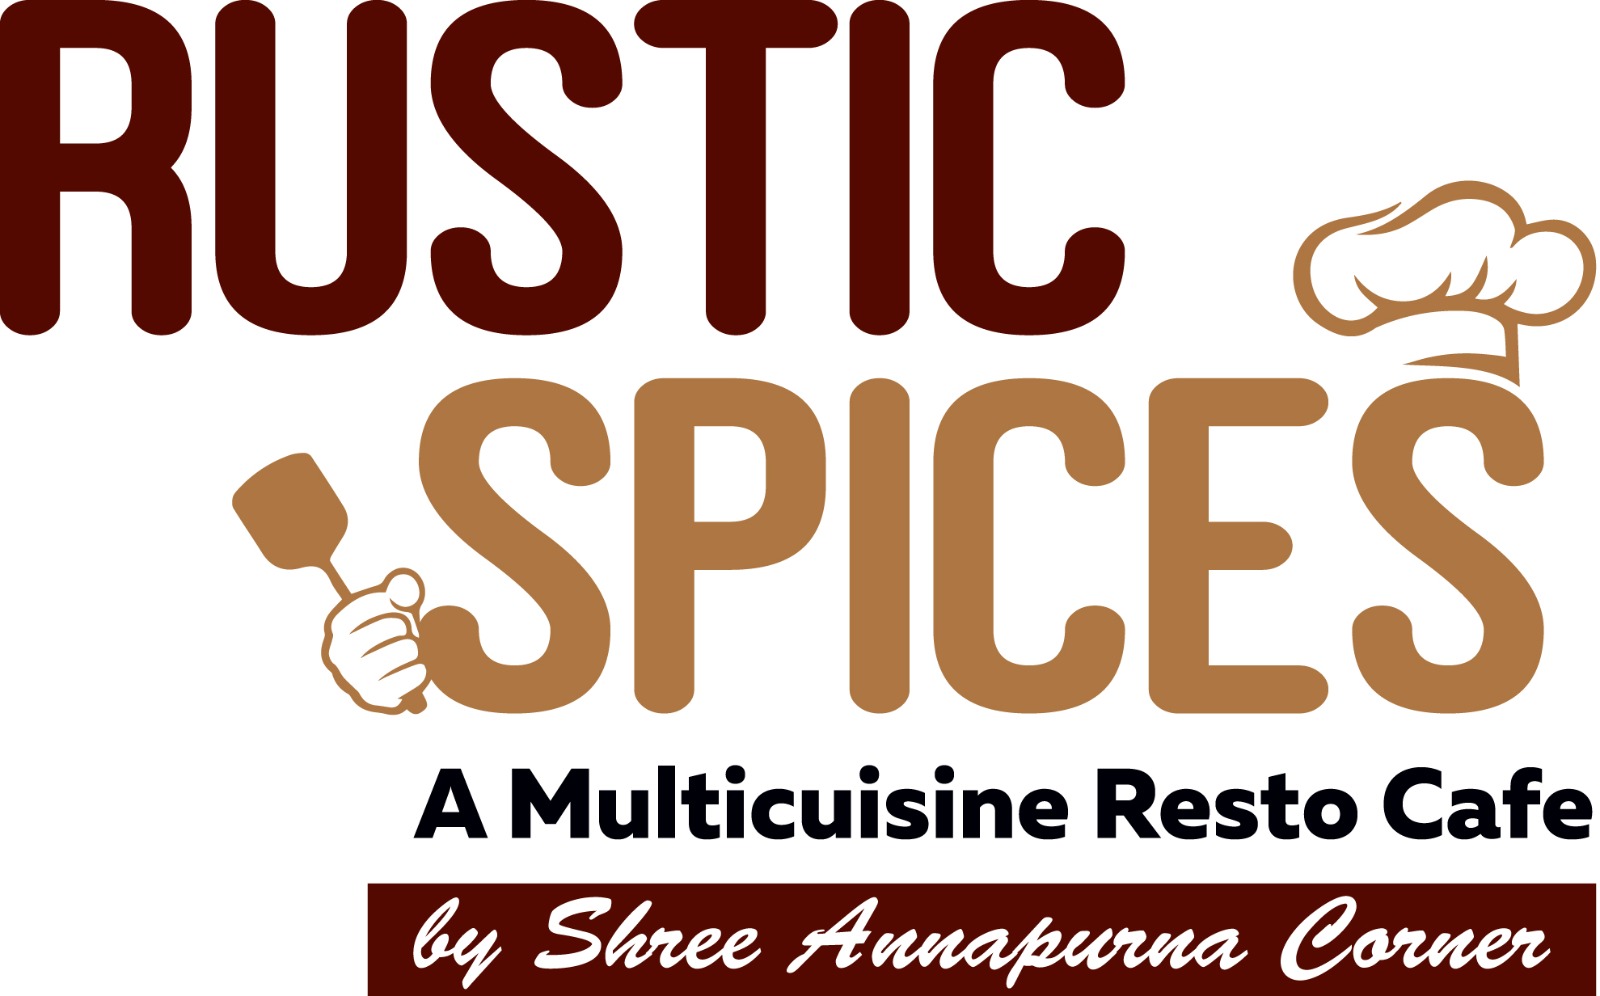 Rustic spices Multi Cuisine Restro Cafe